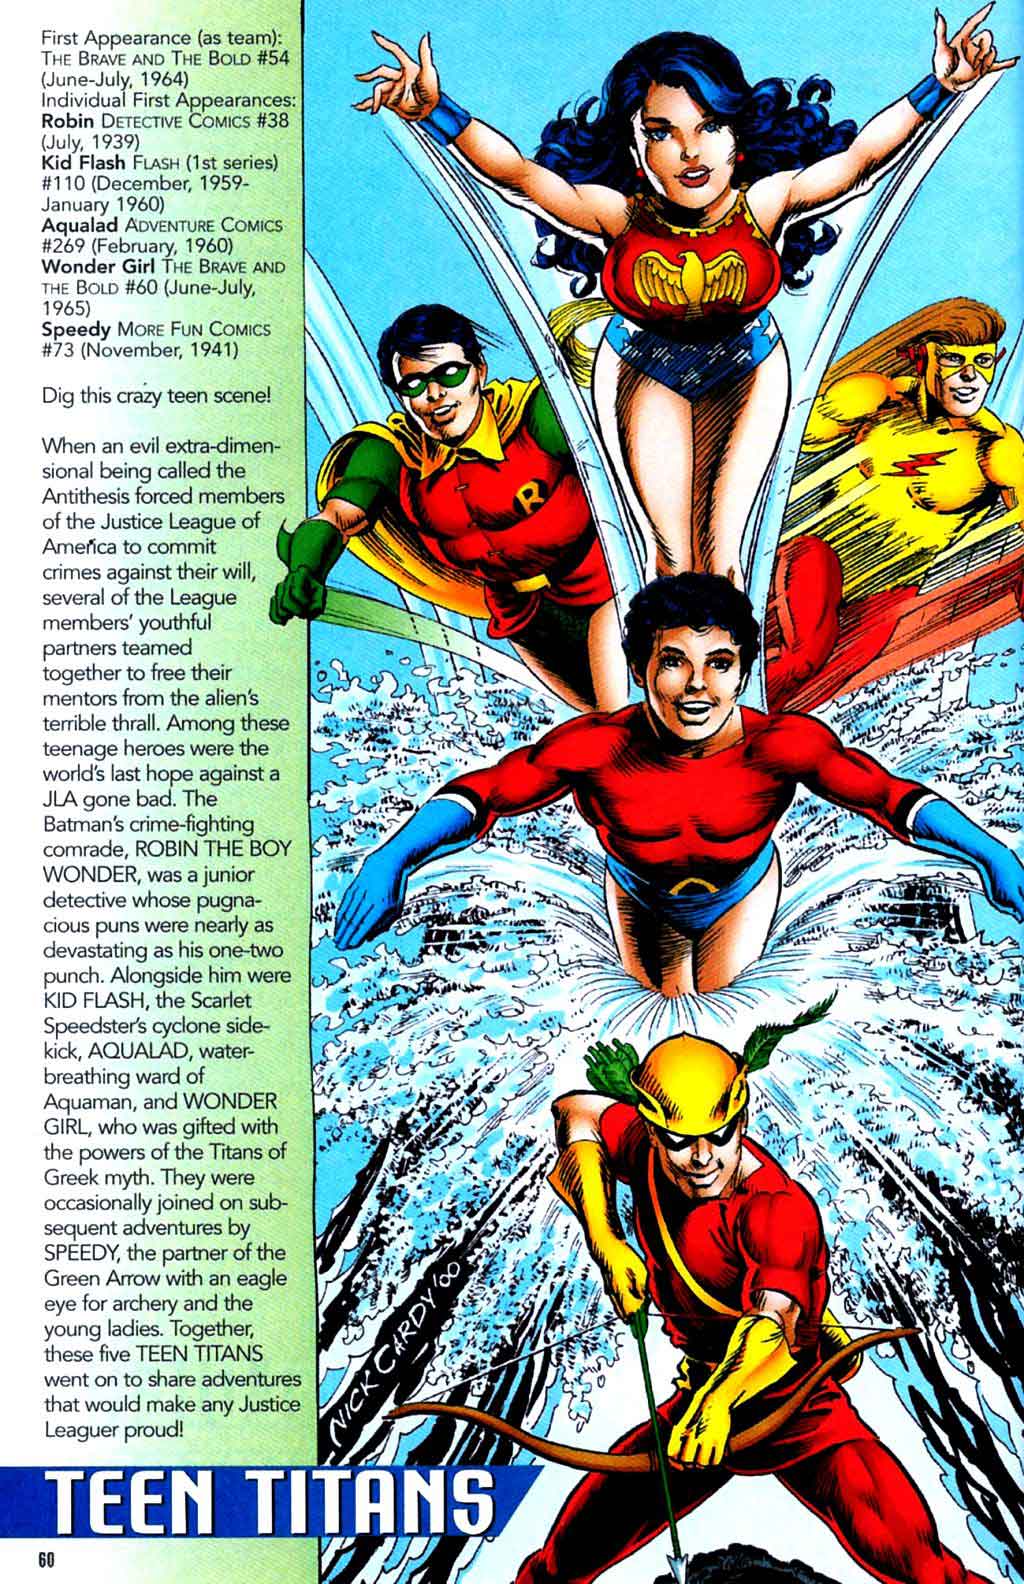 Teen Titans by Scott Beatty & Nick Cardy